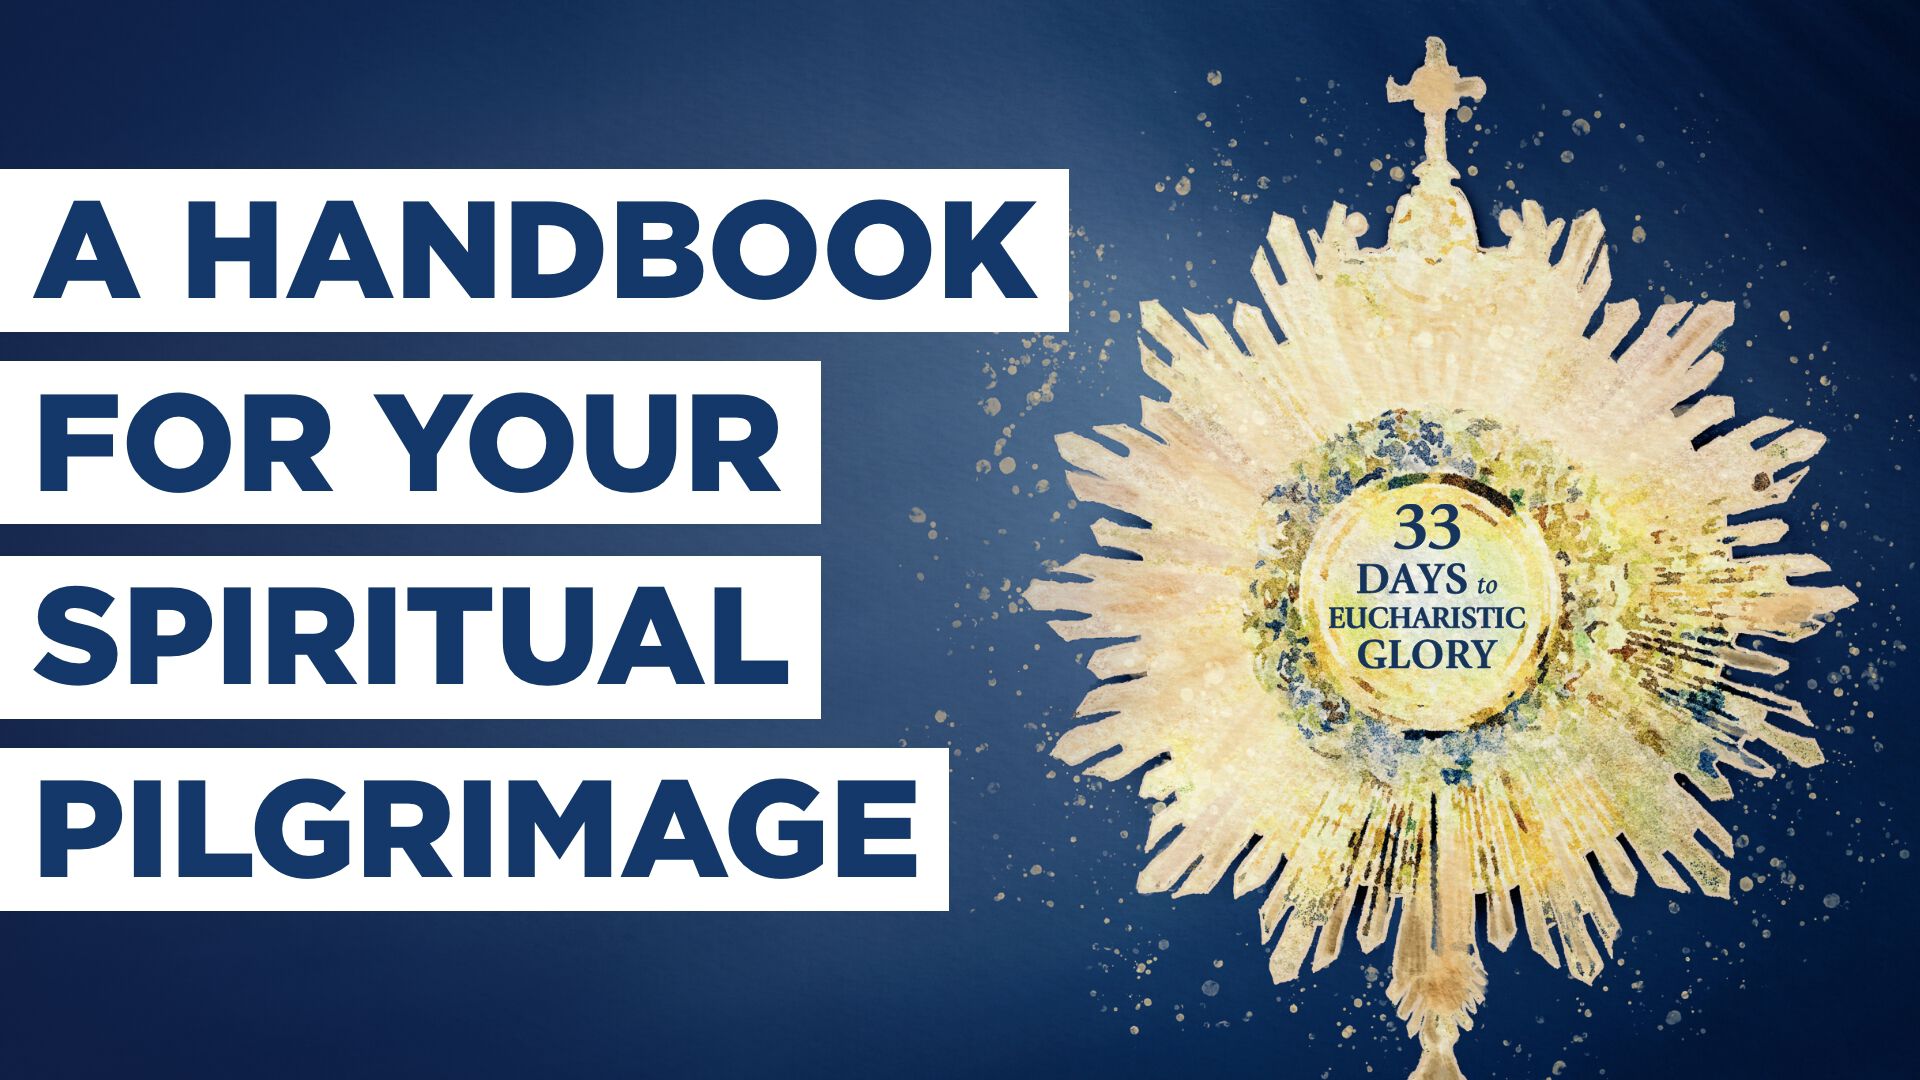 A Handbook for your Spiritual Pilgrimage